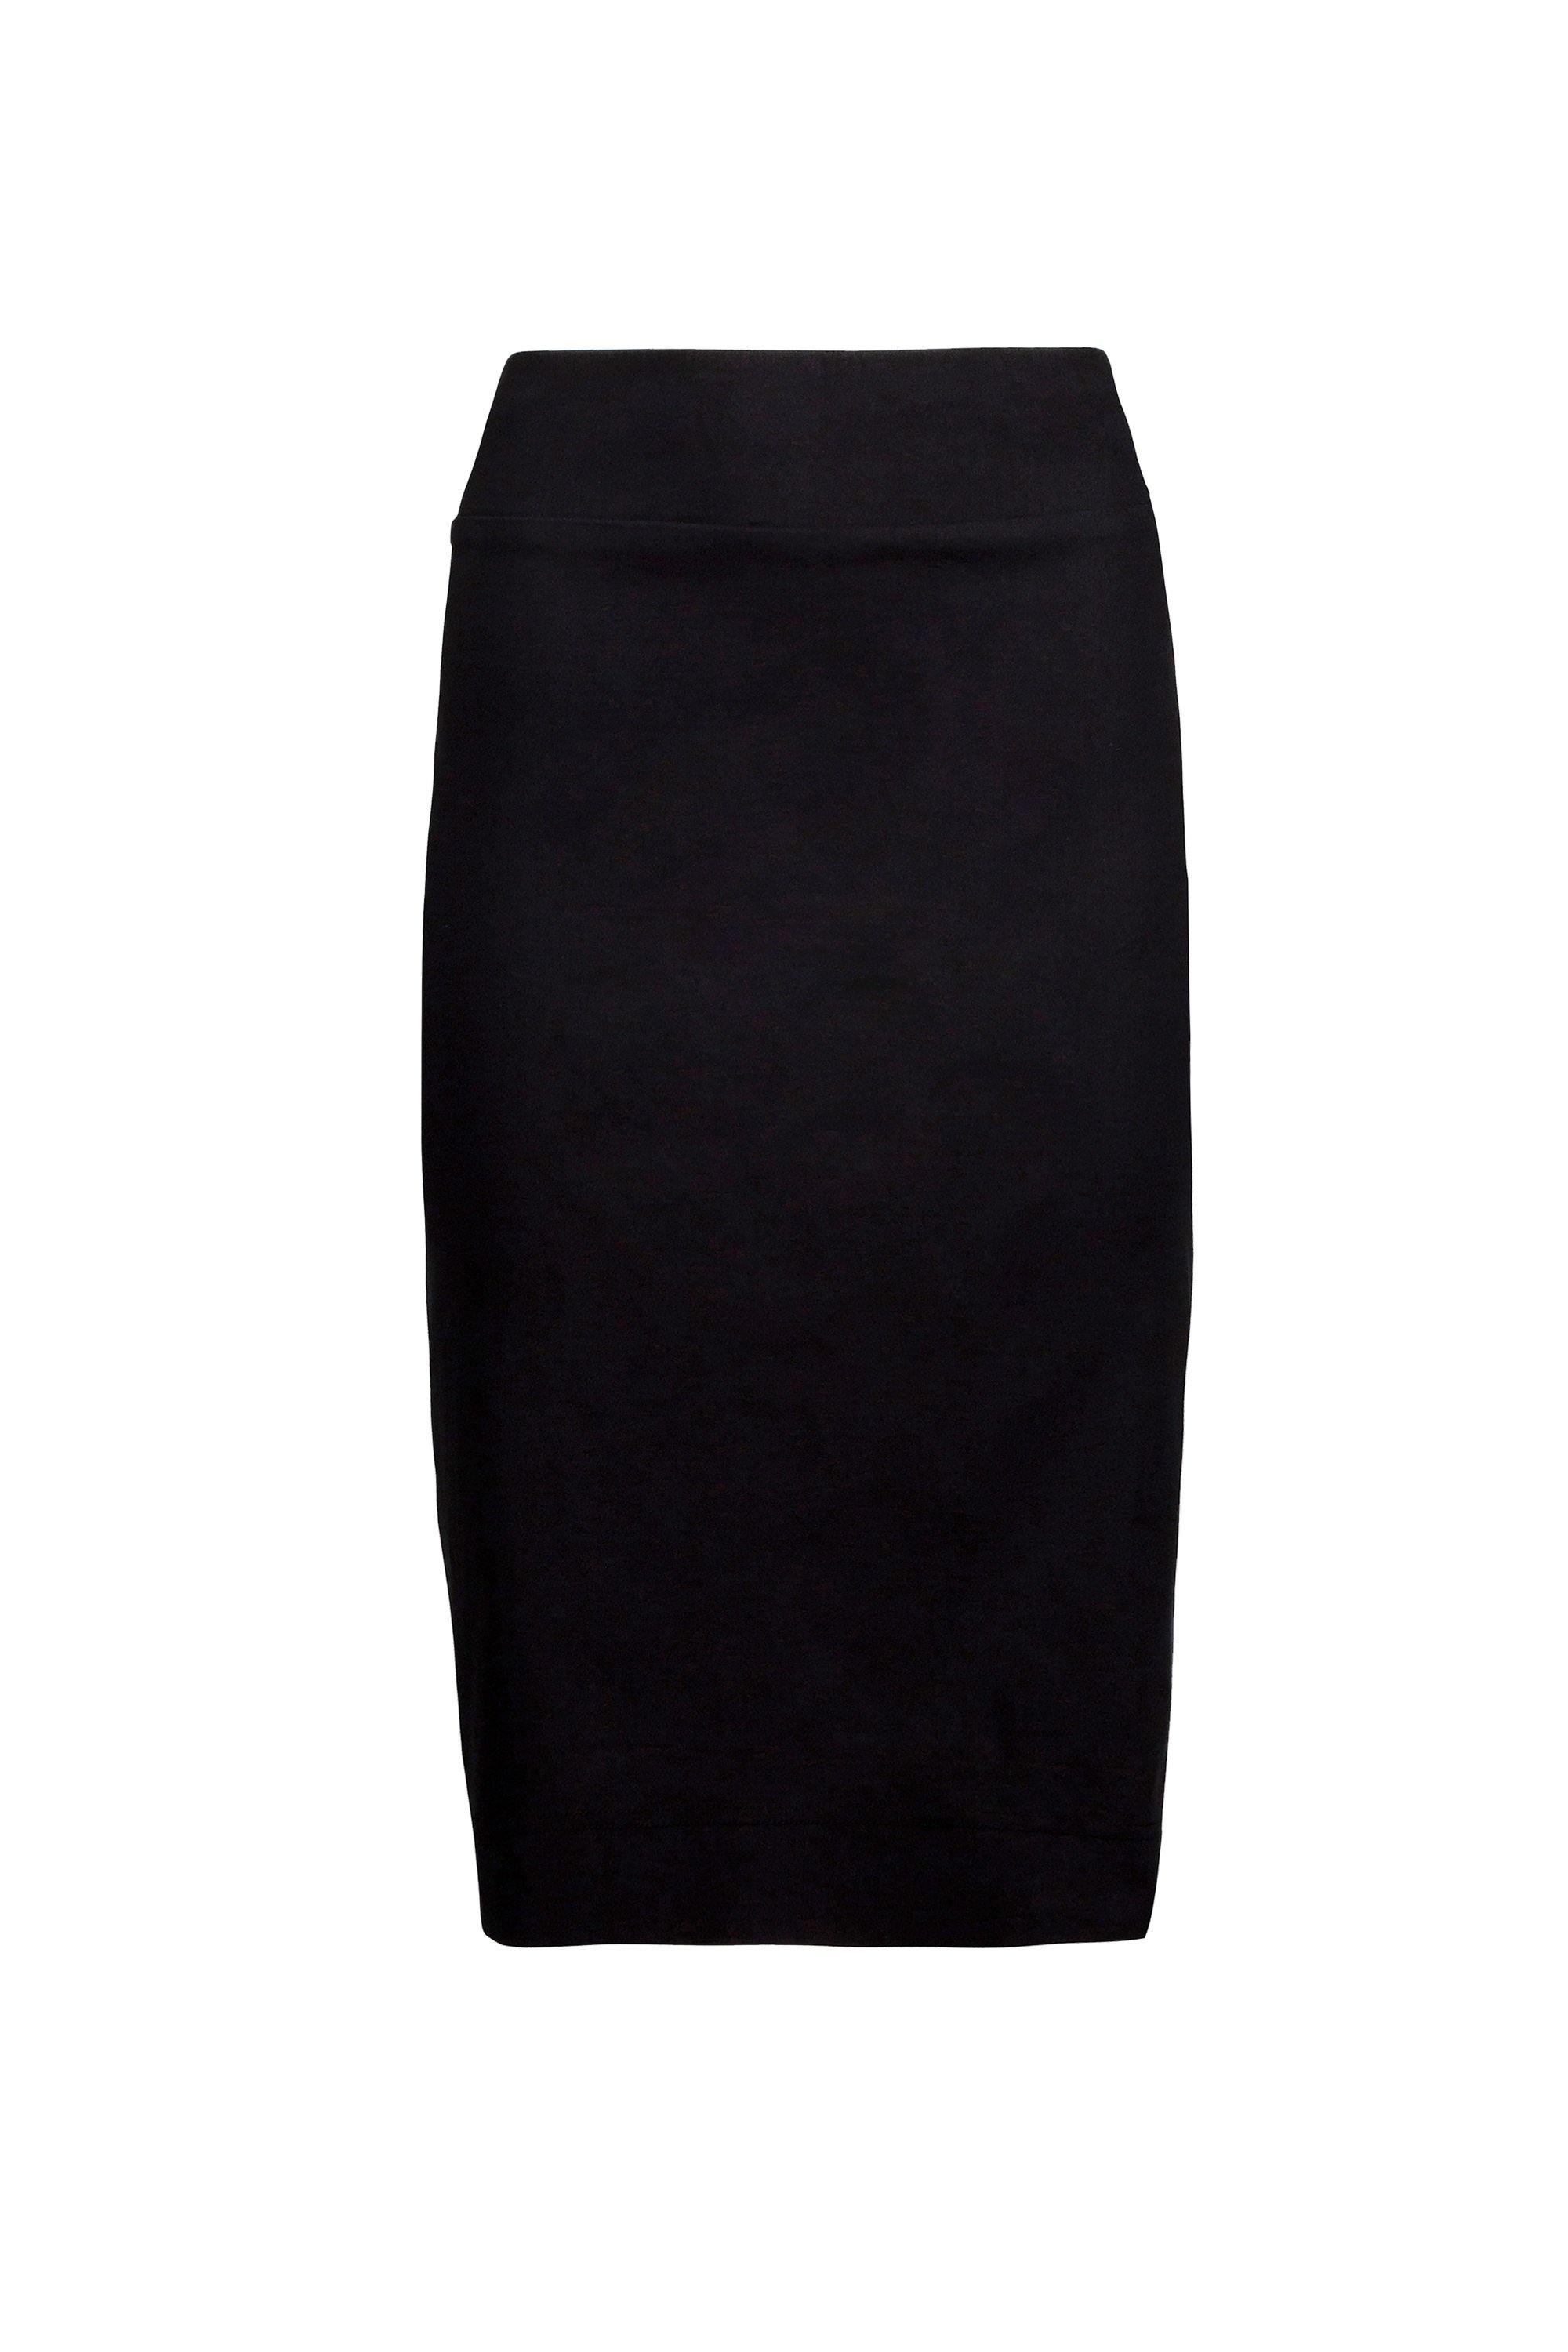 Acrobat Desiree Skirt - Black - Skirt VERGE